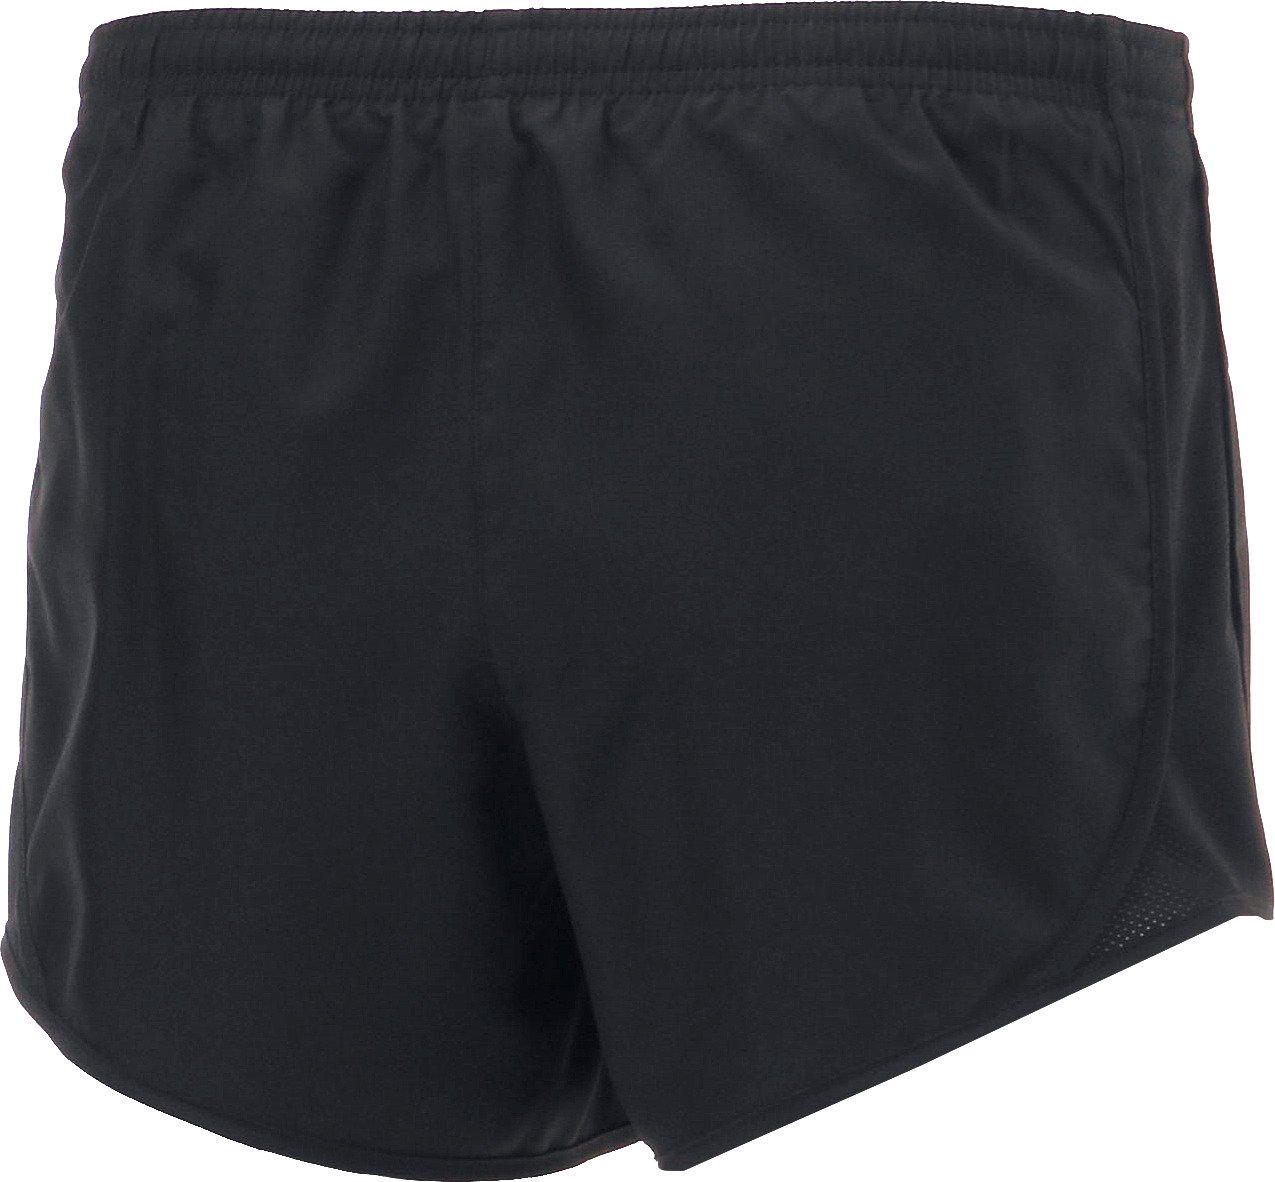 Nike Nike Dri-FIT Tempo Girls' Running Shorts - Black $ 24.99